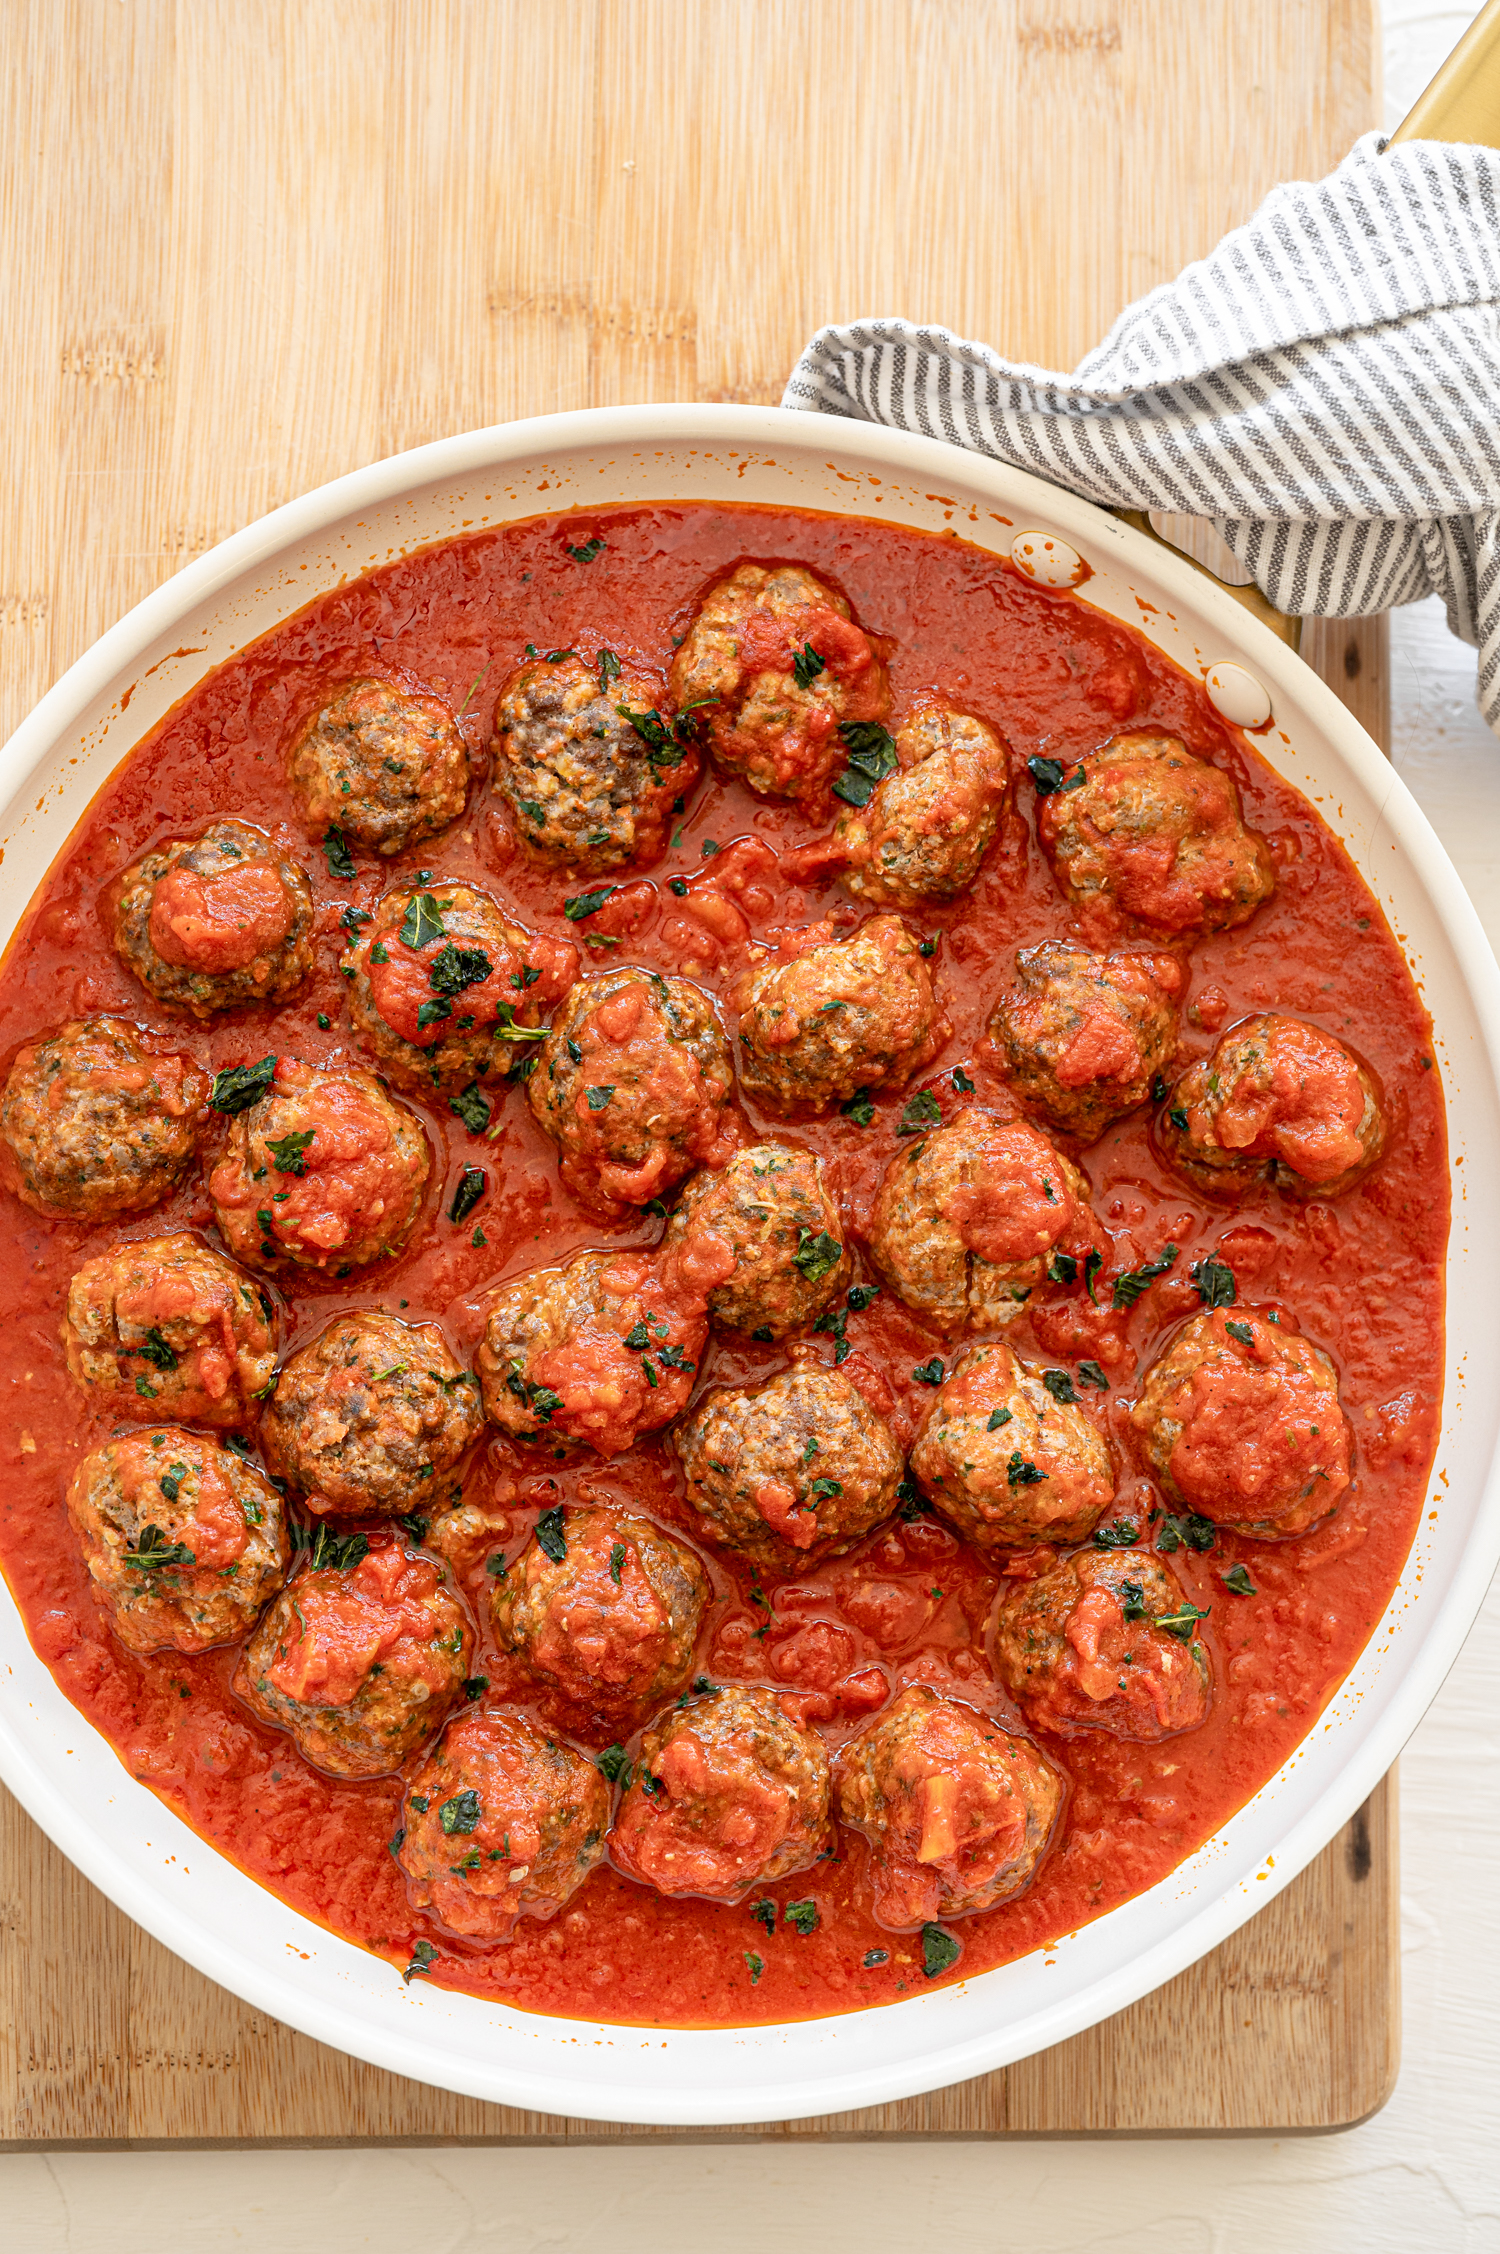 Healthy baked Italian meatballs in marinara sauce.